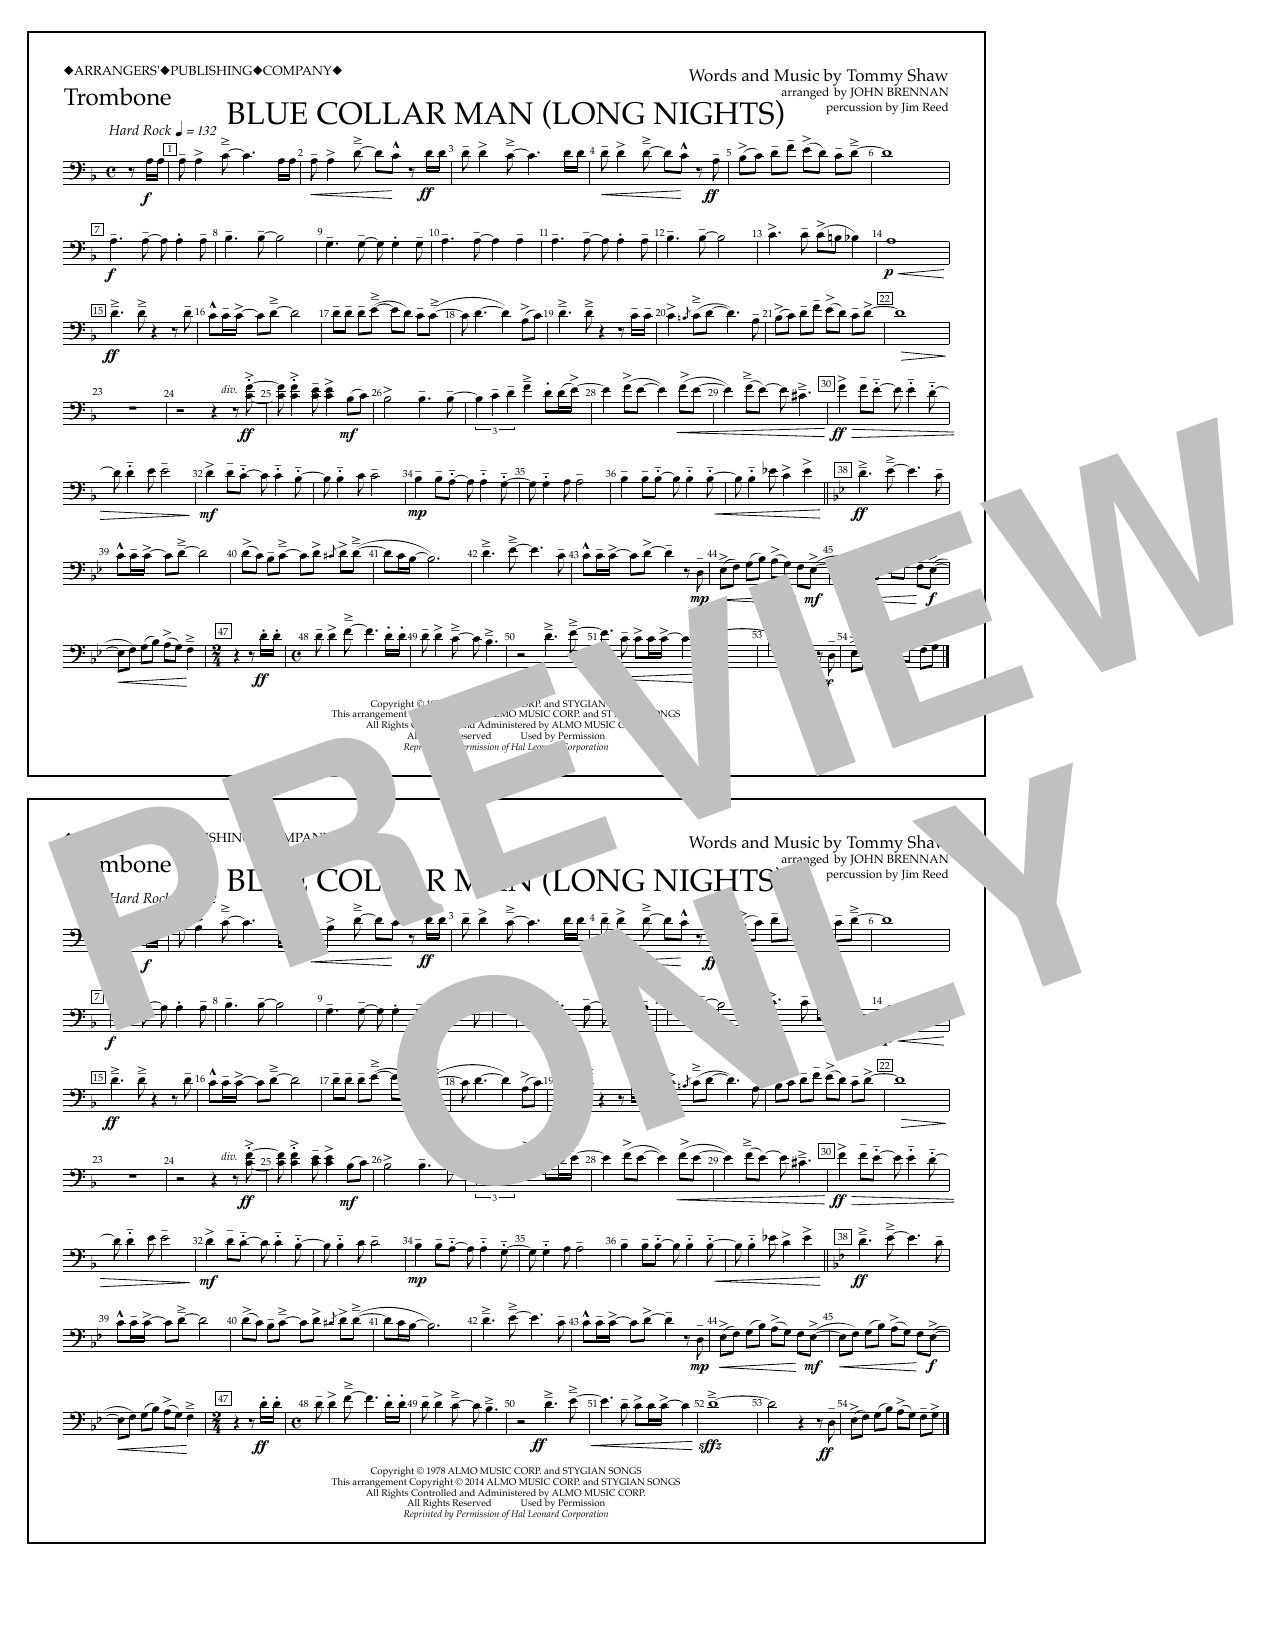 John Brennan Blue Collar Man (Long Nights) - Trombone Sheet Music Notes & Chords for Marching Band - Download or Print PDF